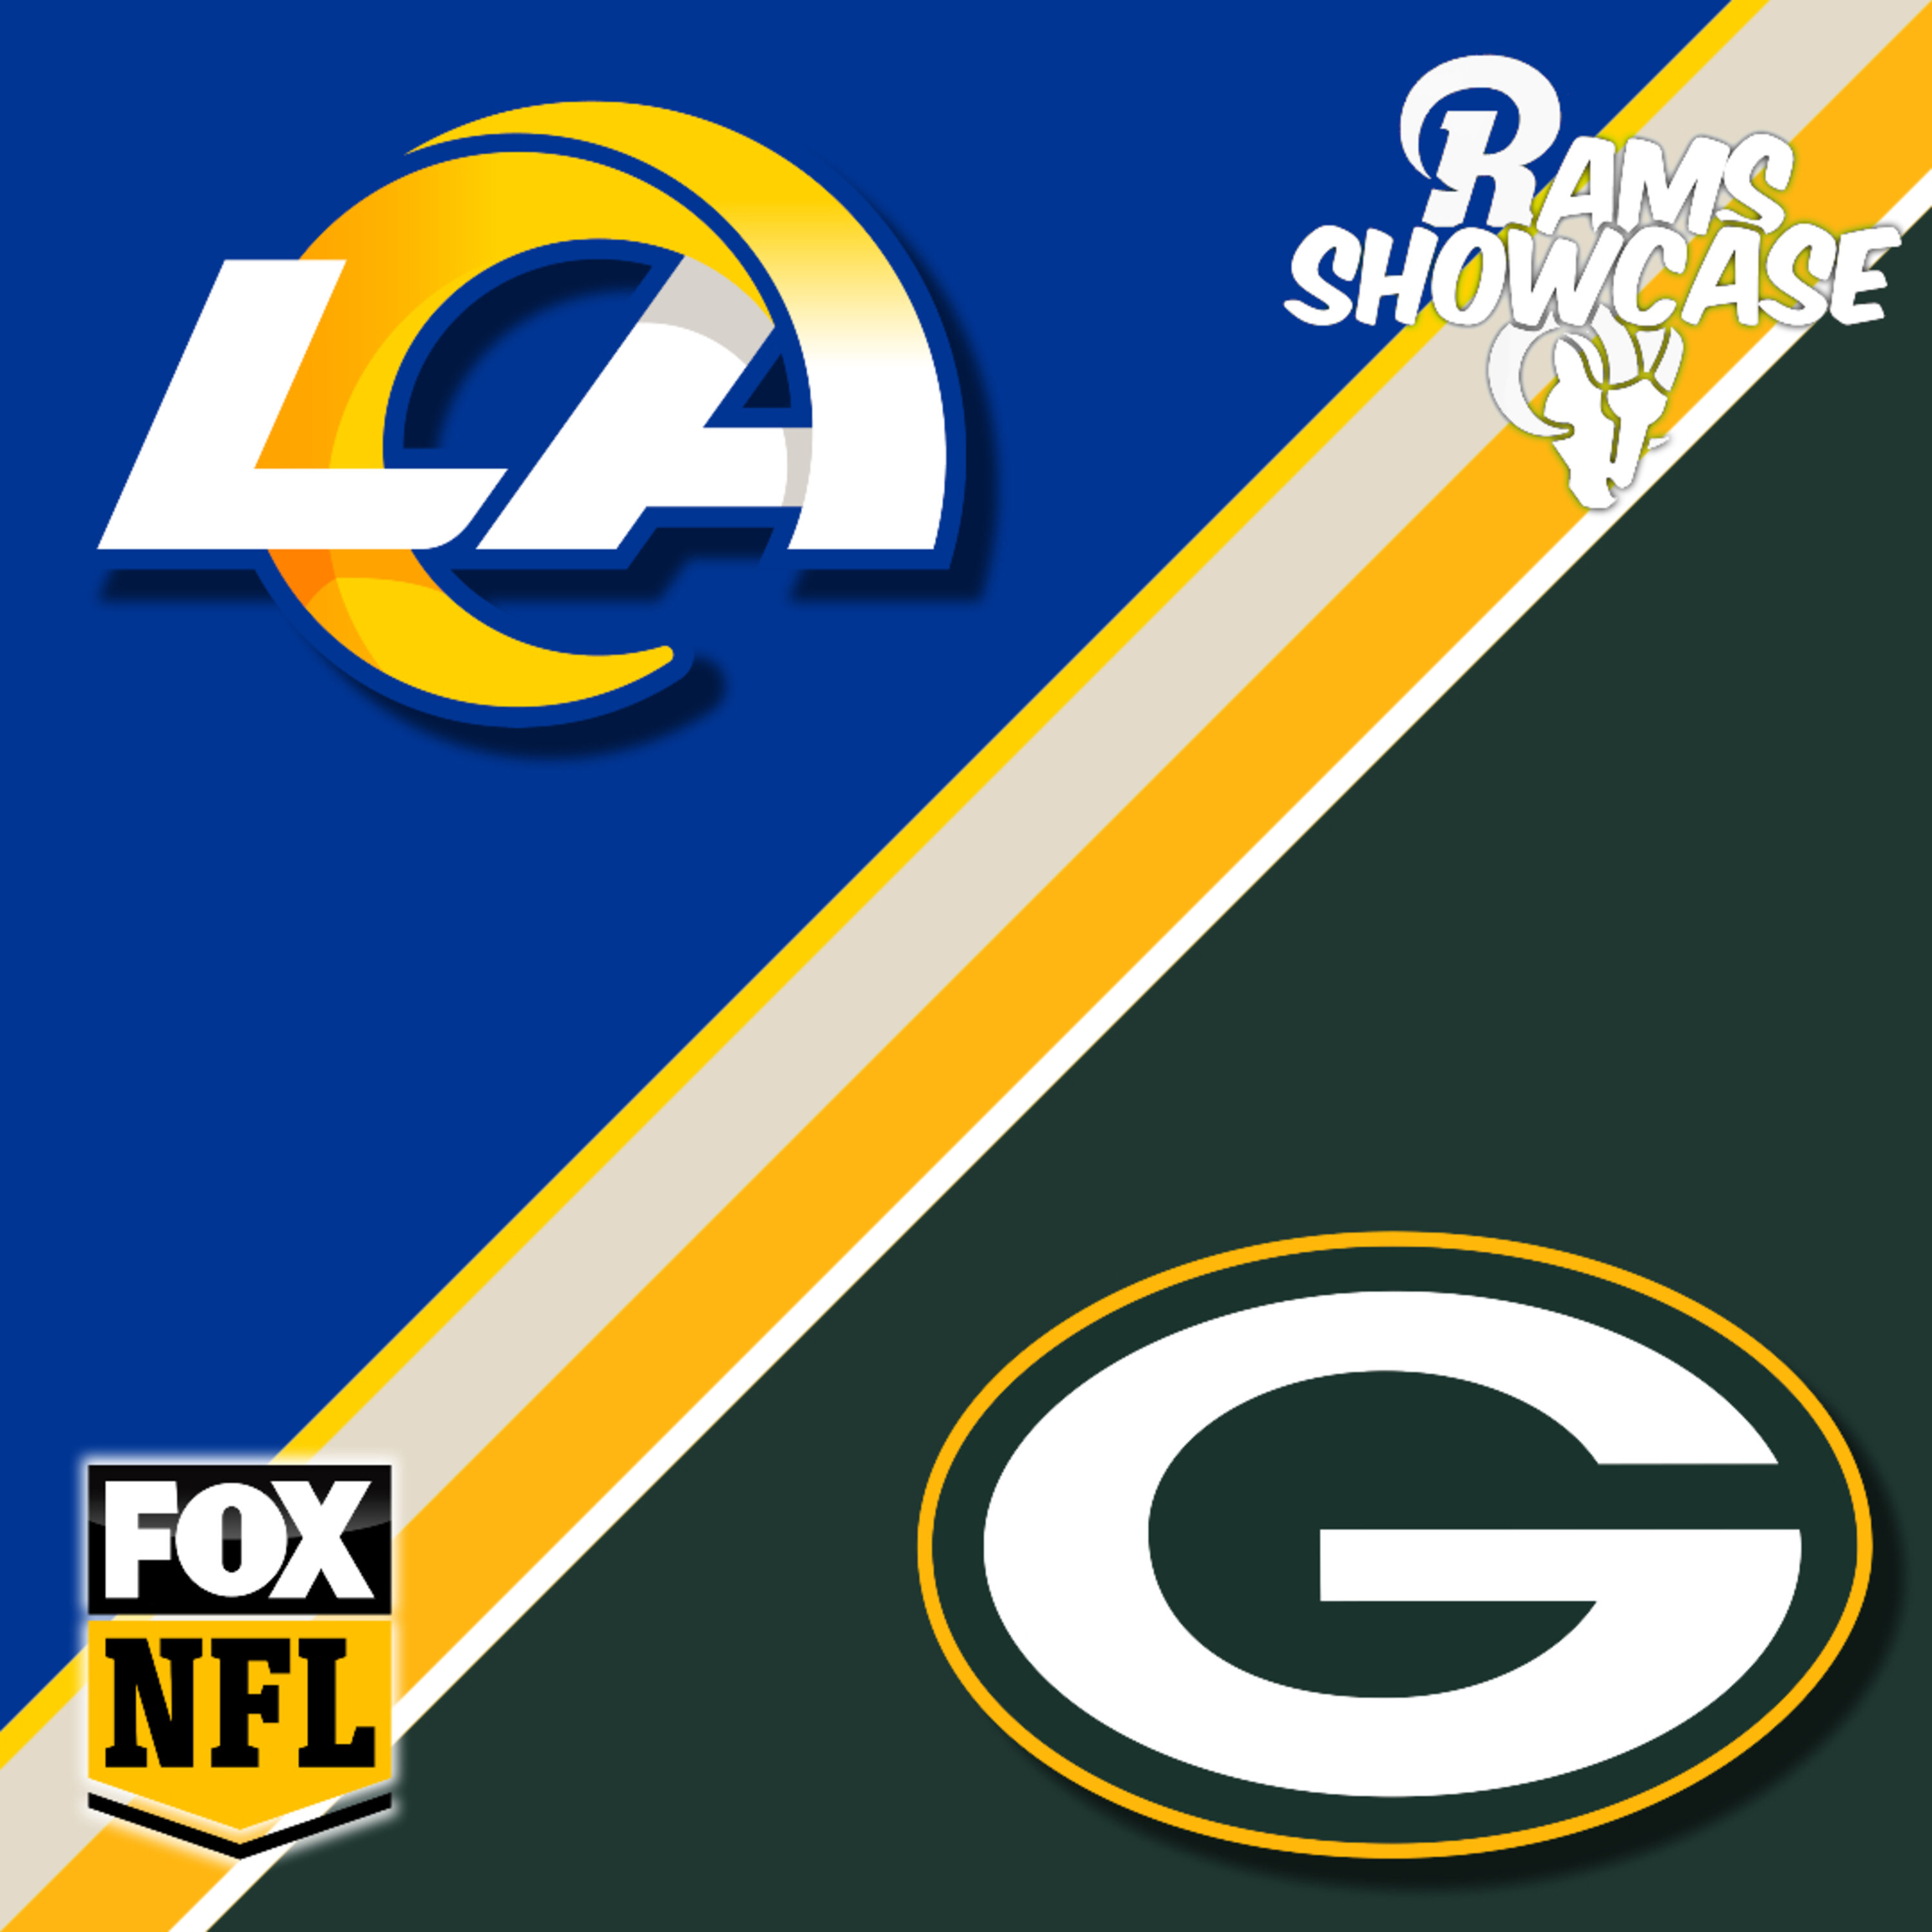 Rams Showcase - Rams @ Packers